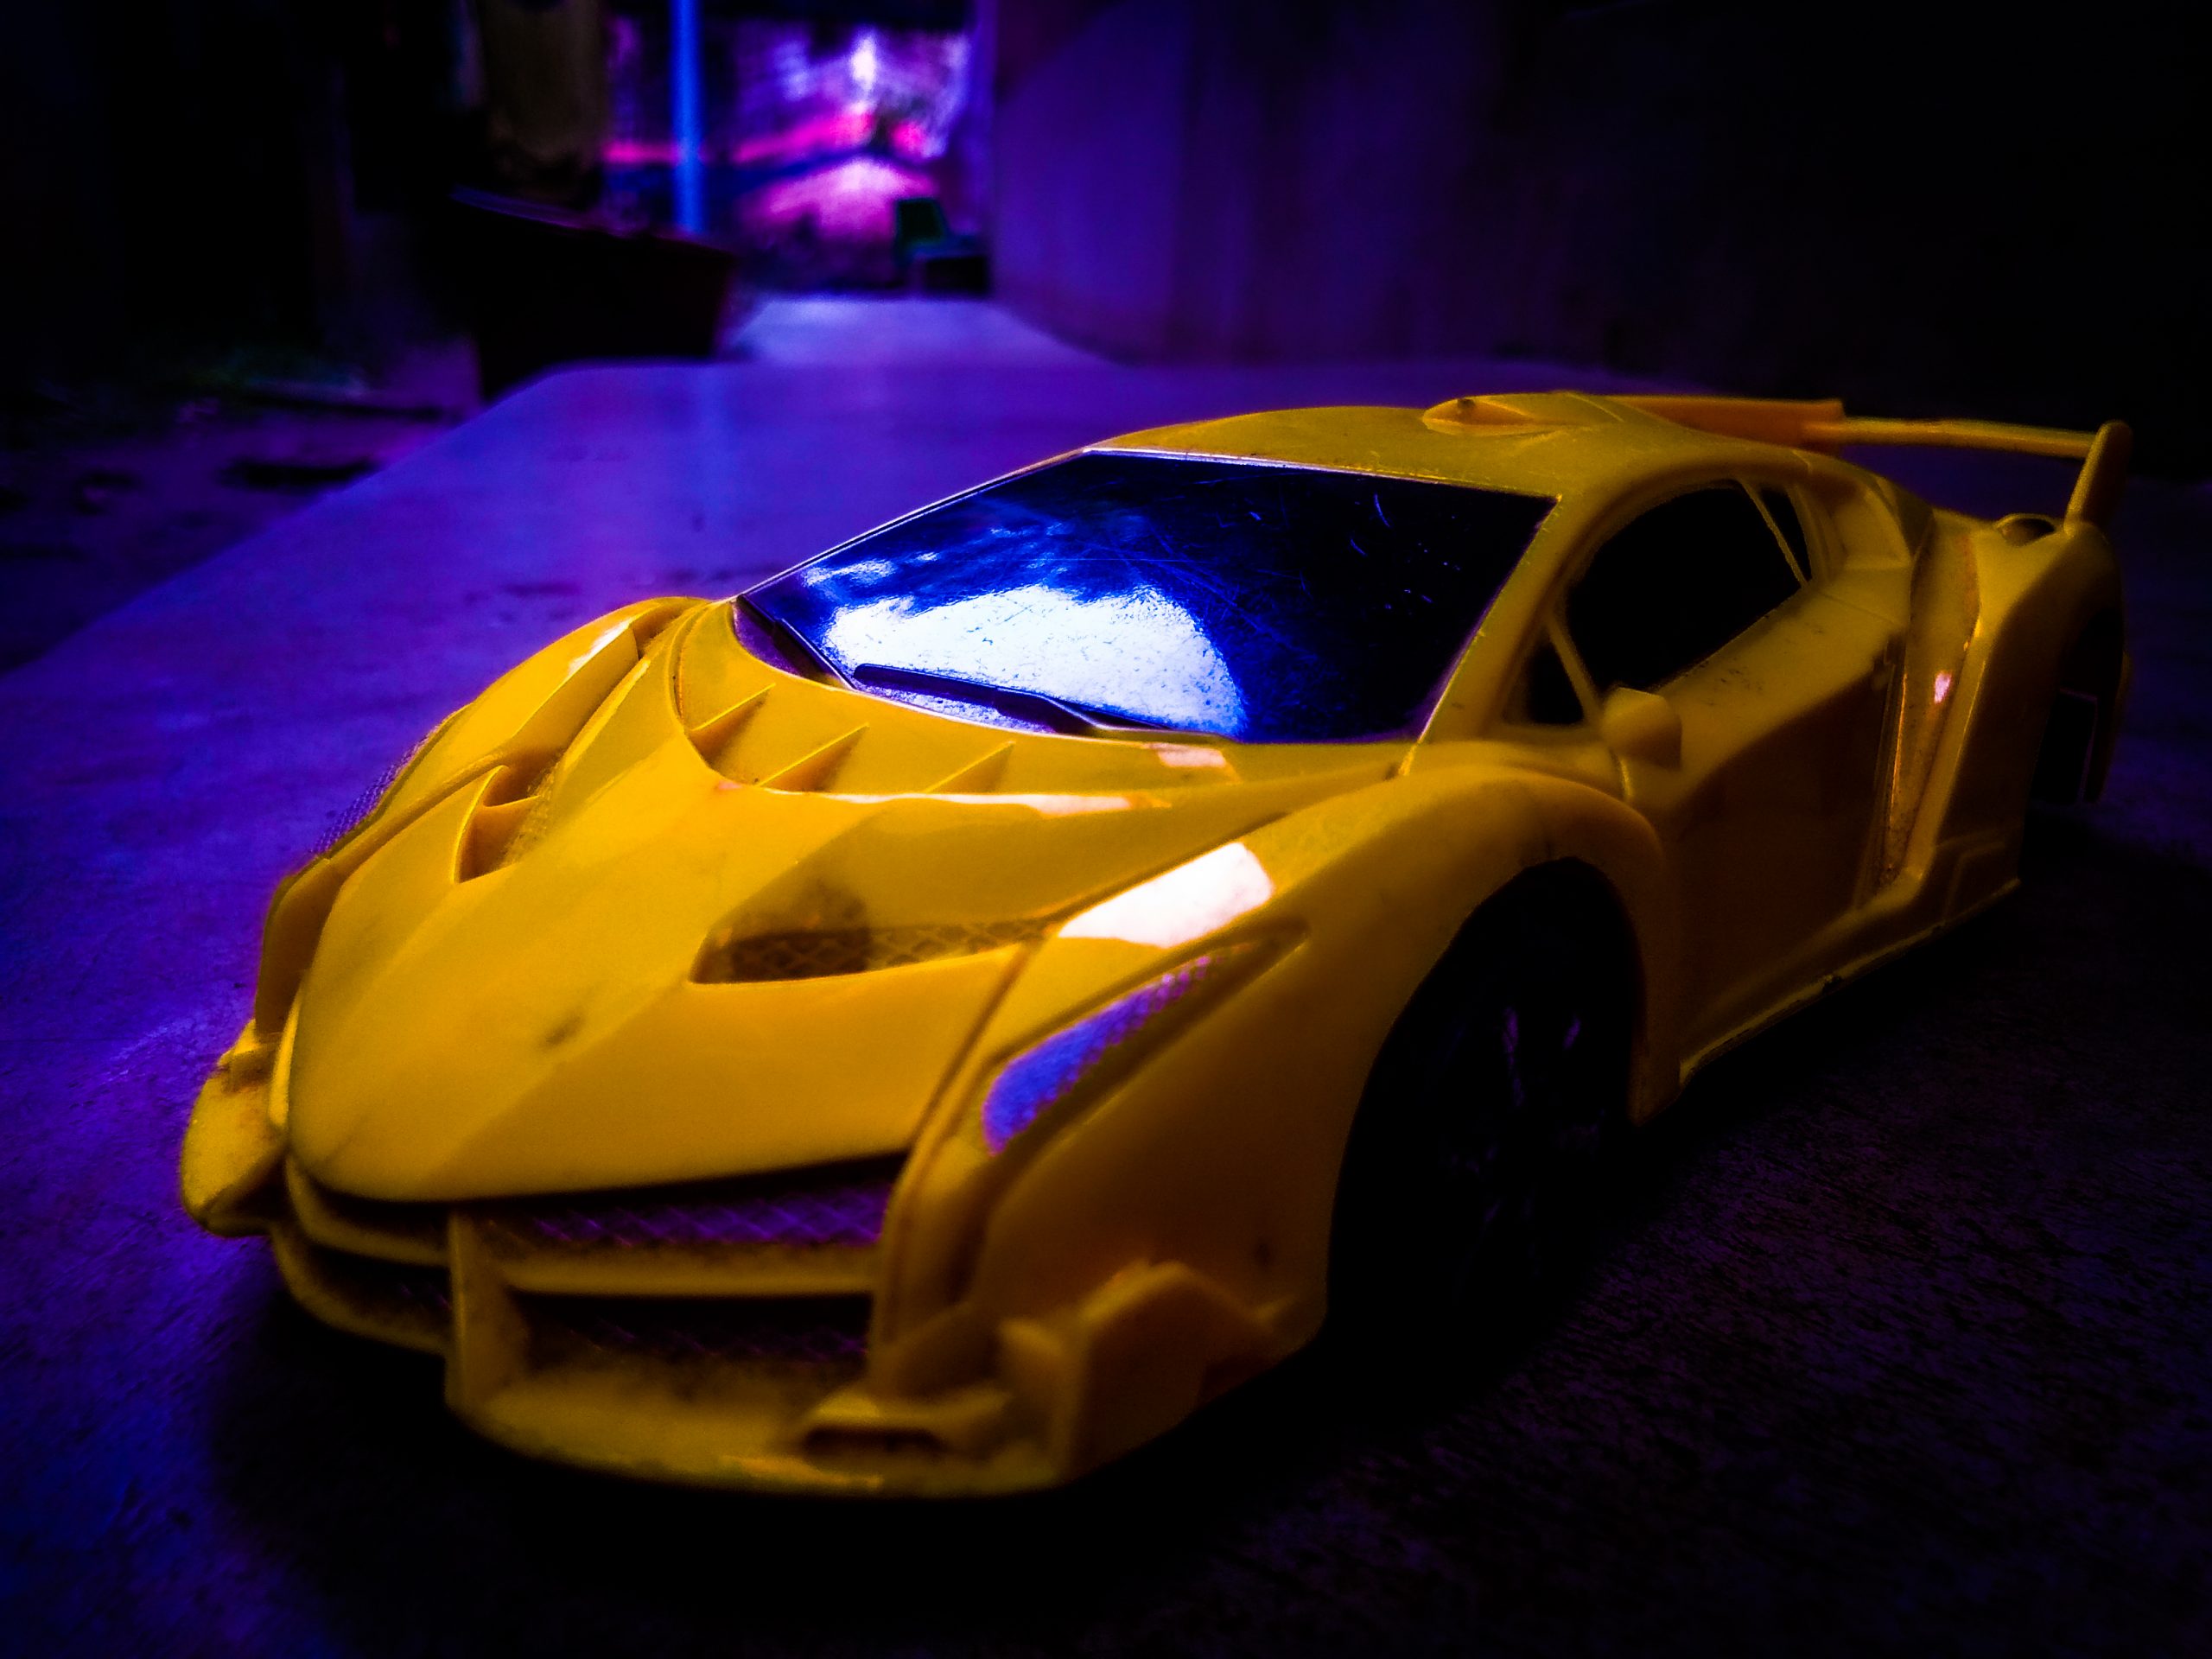 Lamborghini toy car